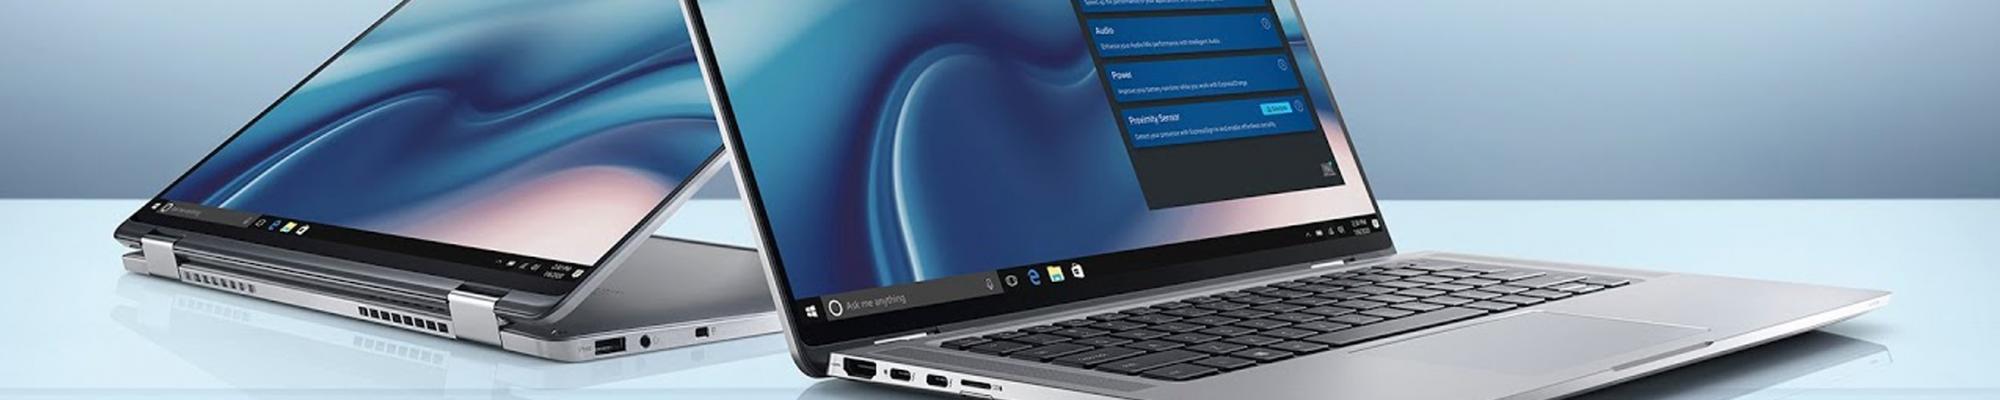 Nieuwe line-up van Dell devices: ook beschikbaar via Workplace-as-a-service formule